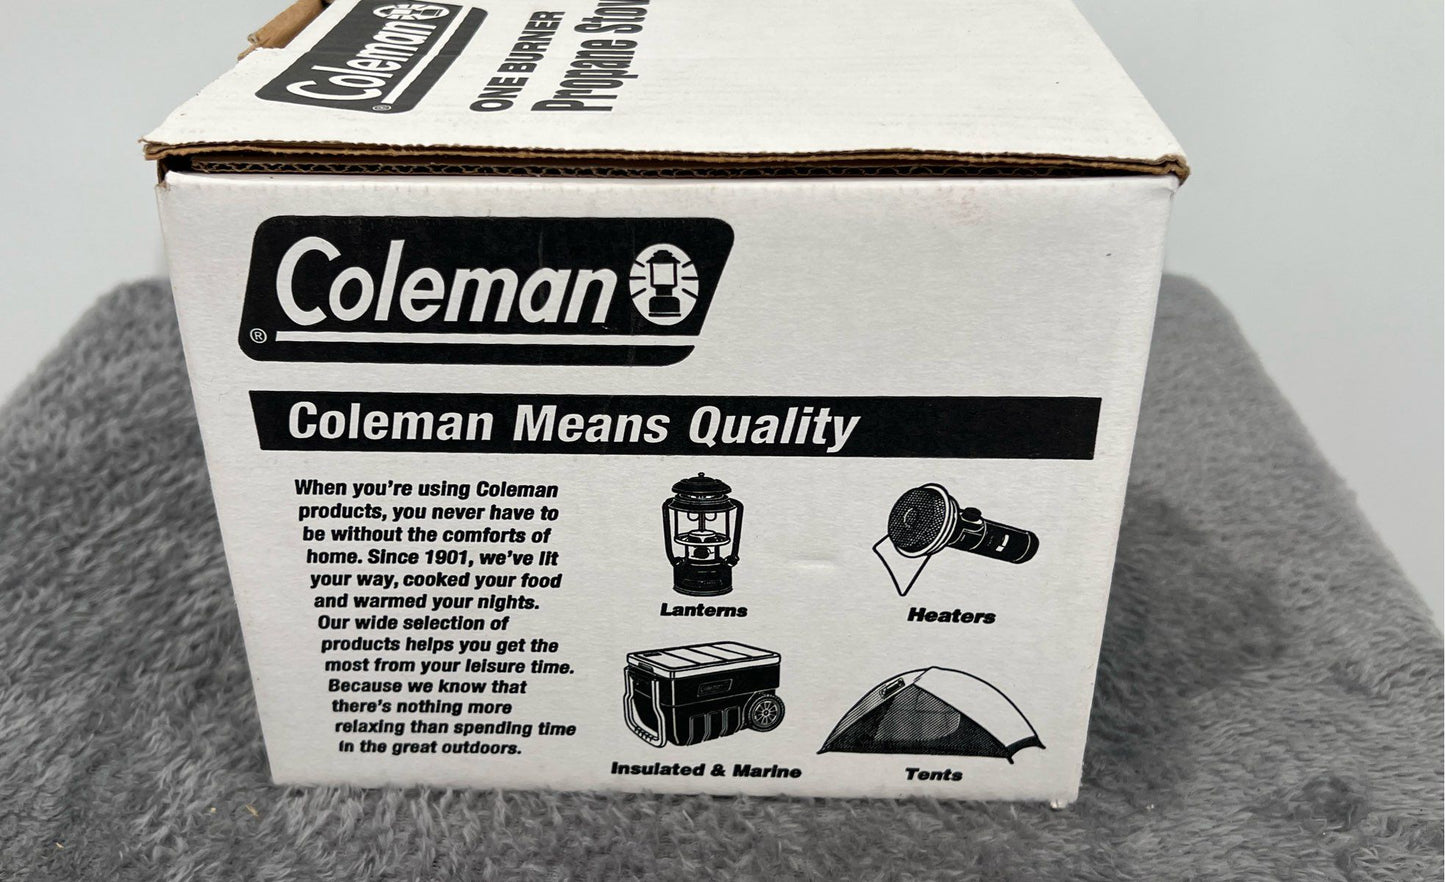 New Coleman One Burner Propane Stove #5431-700G 10,000 BTU-Large 8" Burner Bowl